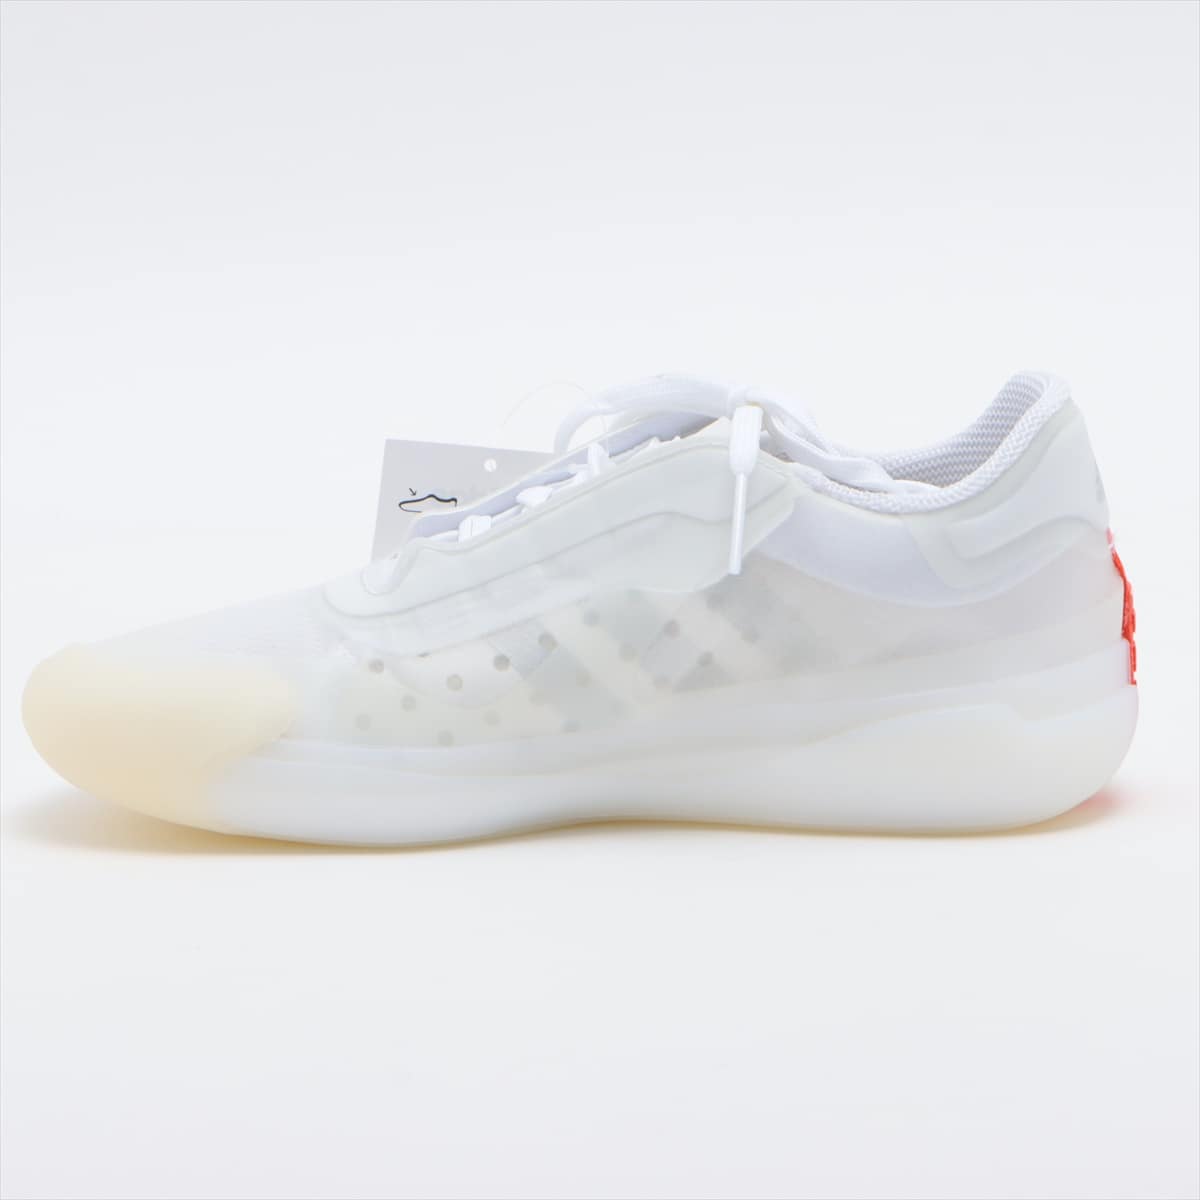 Prada Sport x adidas Fabric Sneakers 25.0cm Unisex White A+P Luna Rossa 21 FZ5447